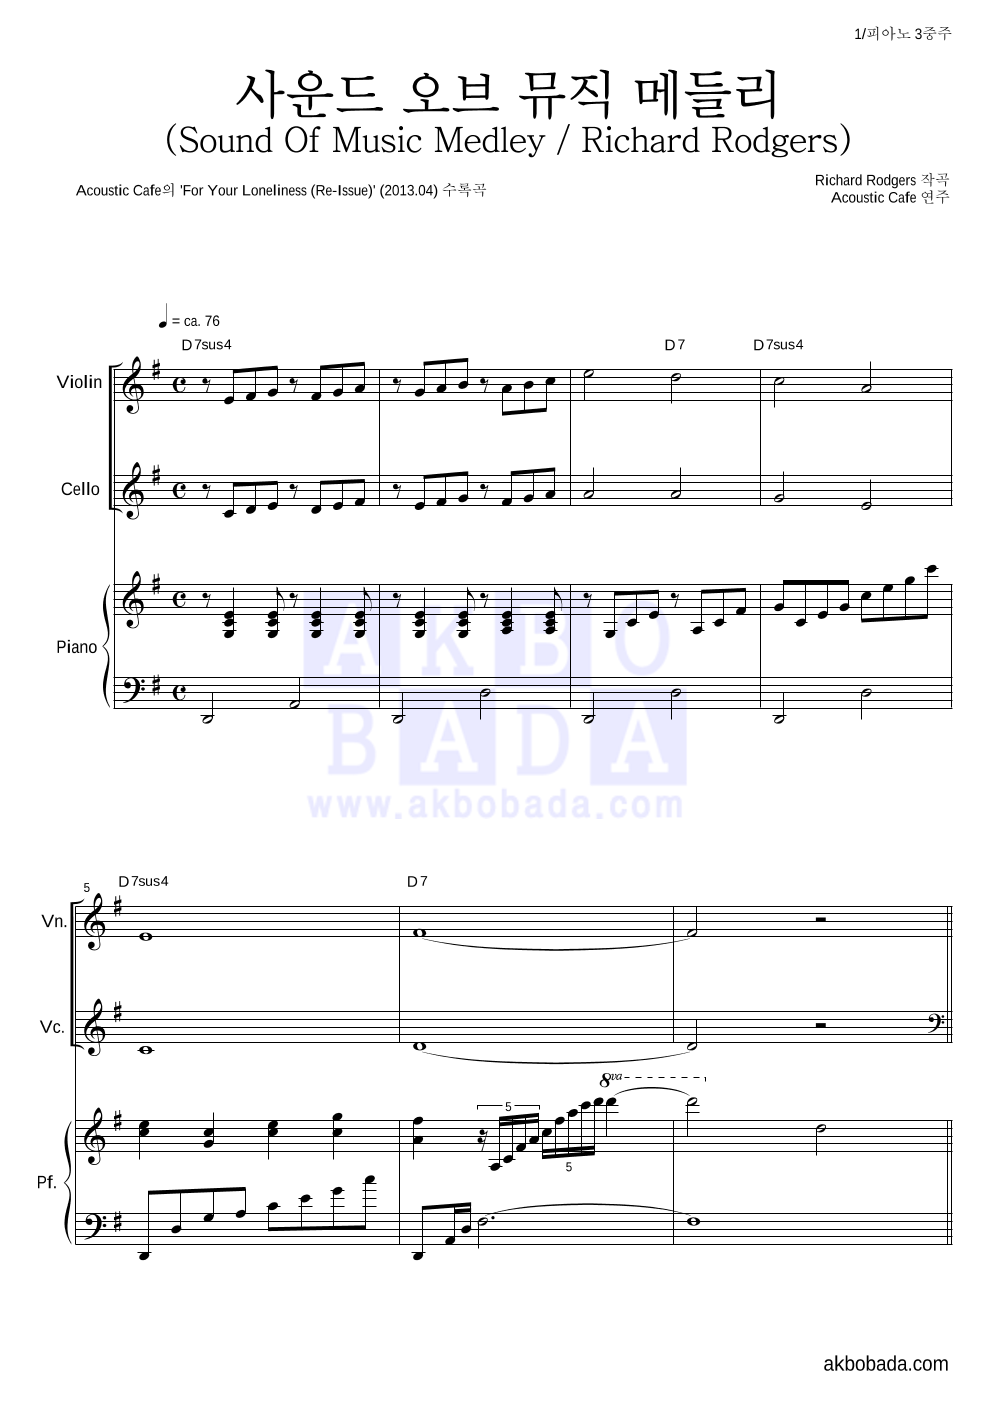 Acoustic Cafe - 사운드 오브 뮤직 메들리 (Sound Of Music Medley / Richard Rodgers) 피아노3중주 악보 